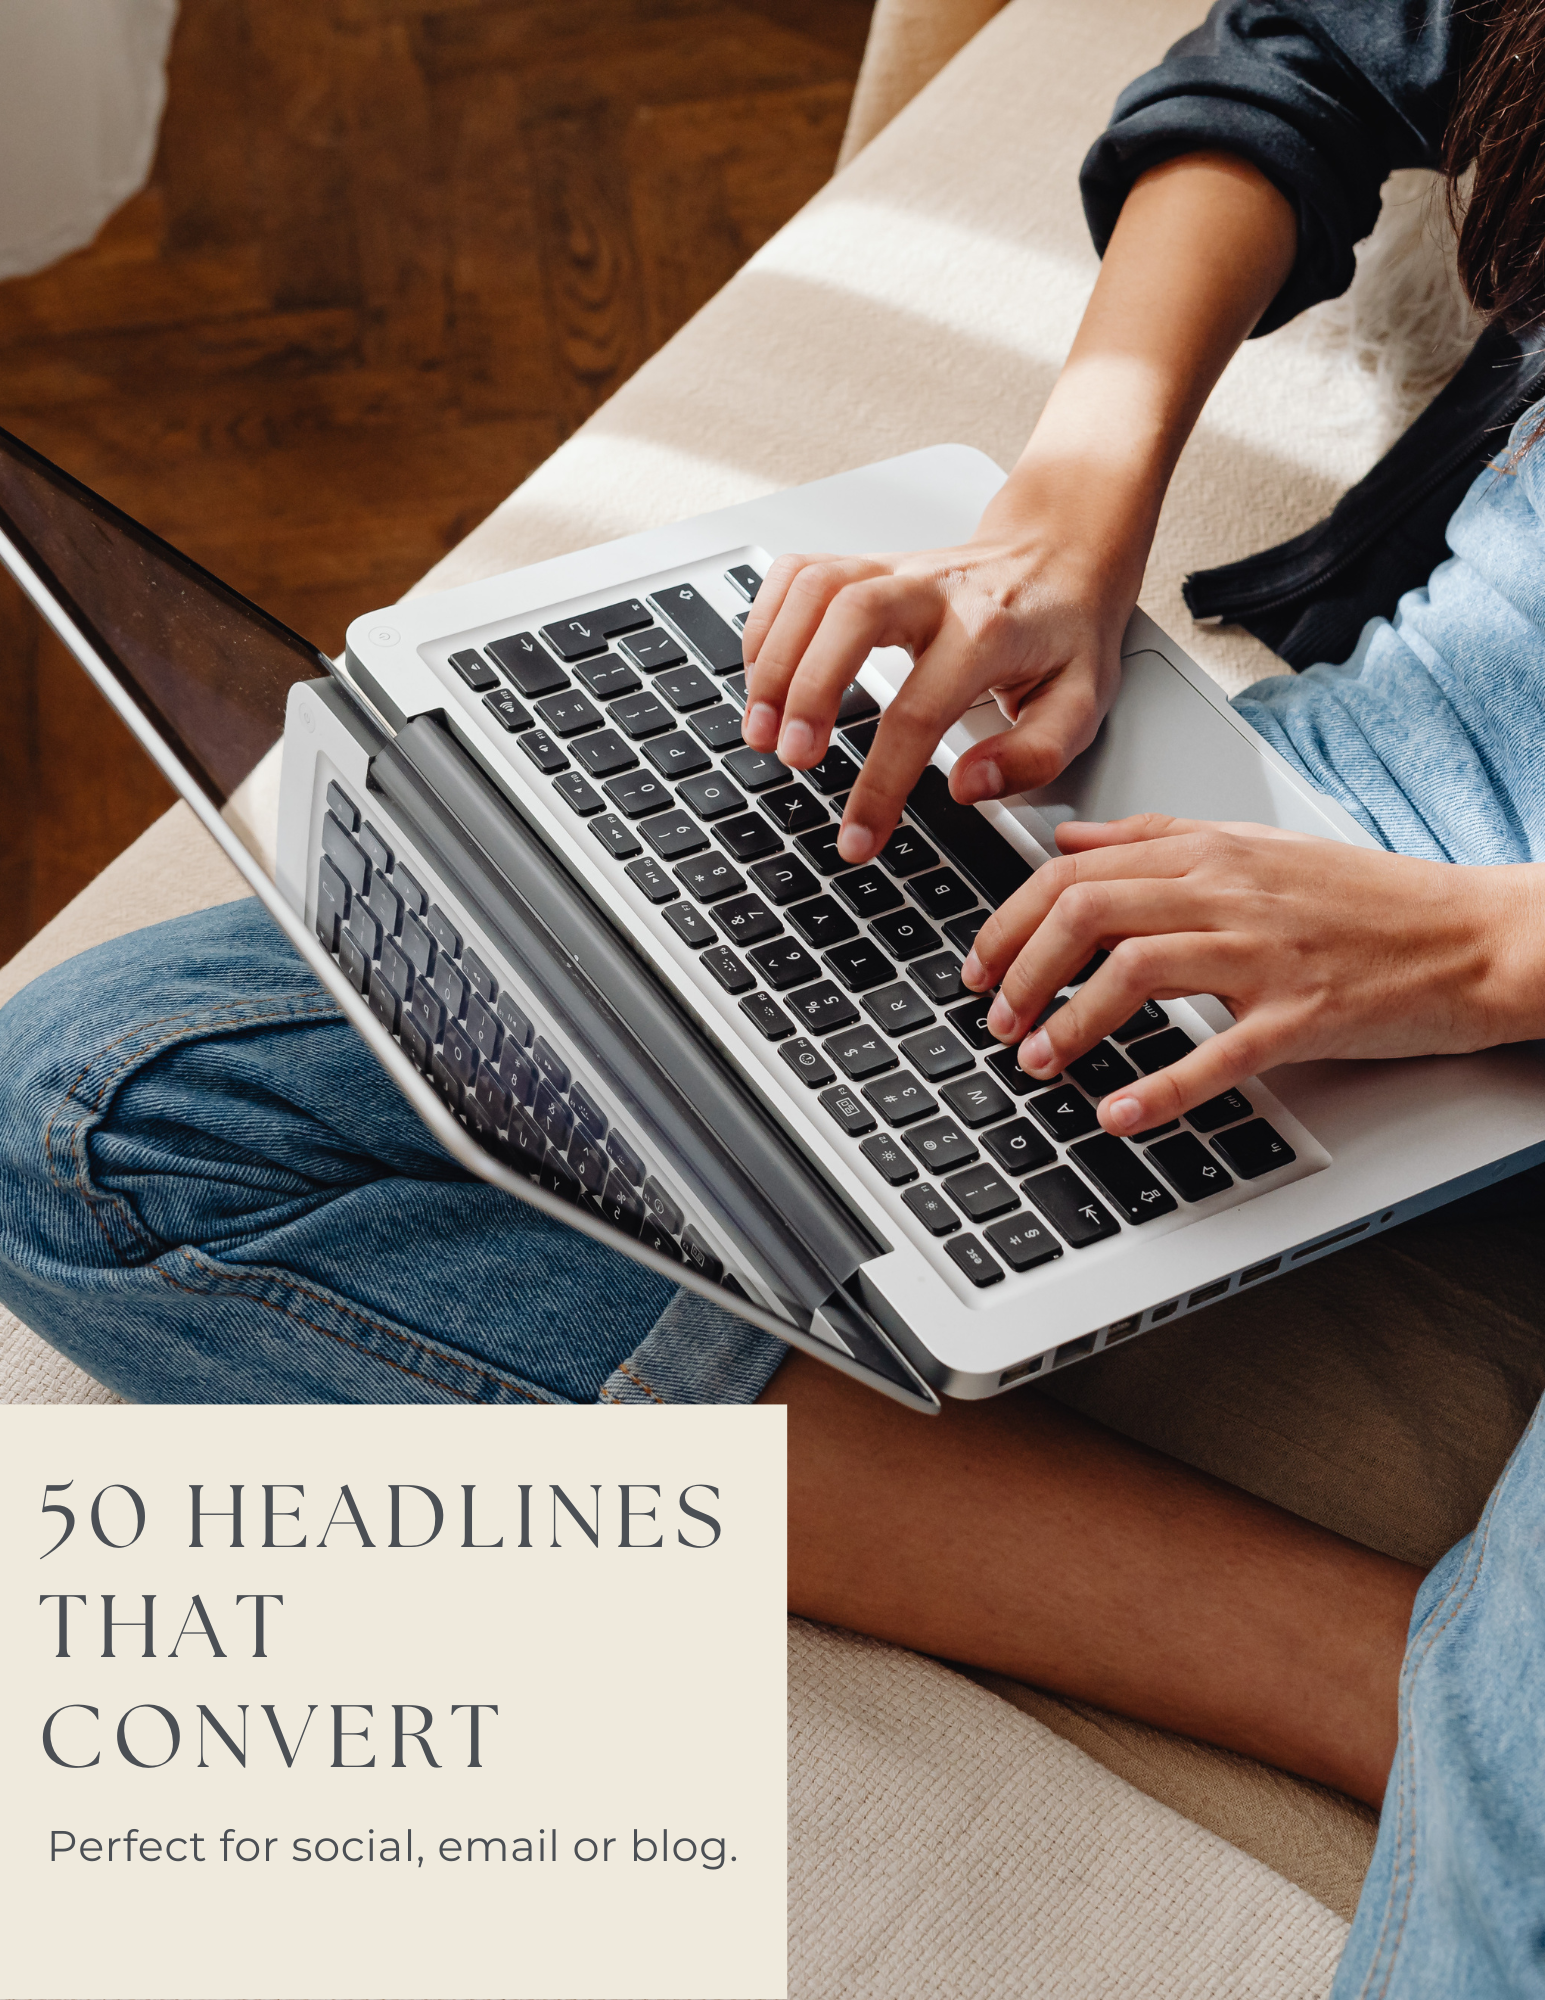 50 Headlines That Convert (2)